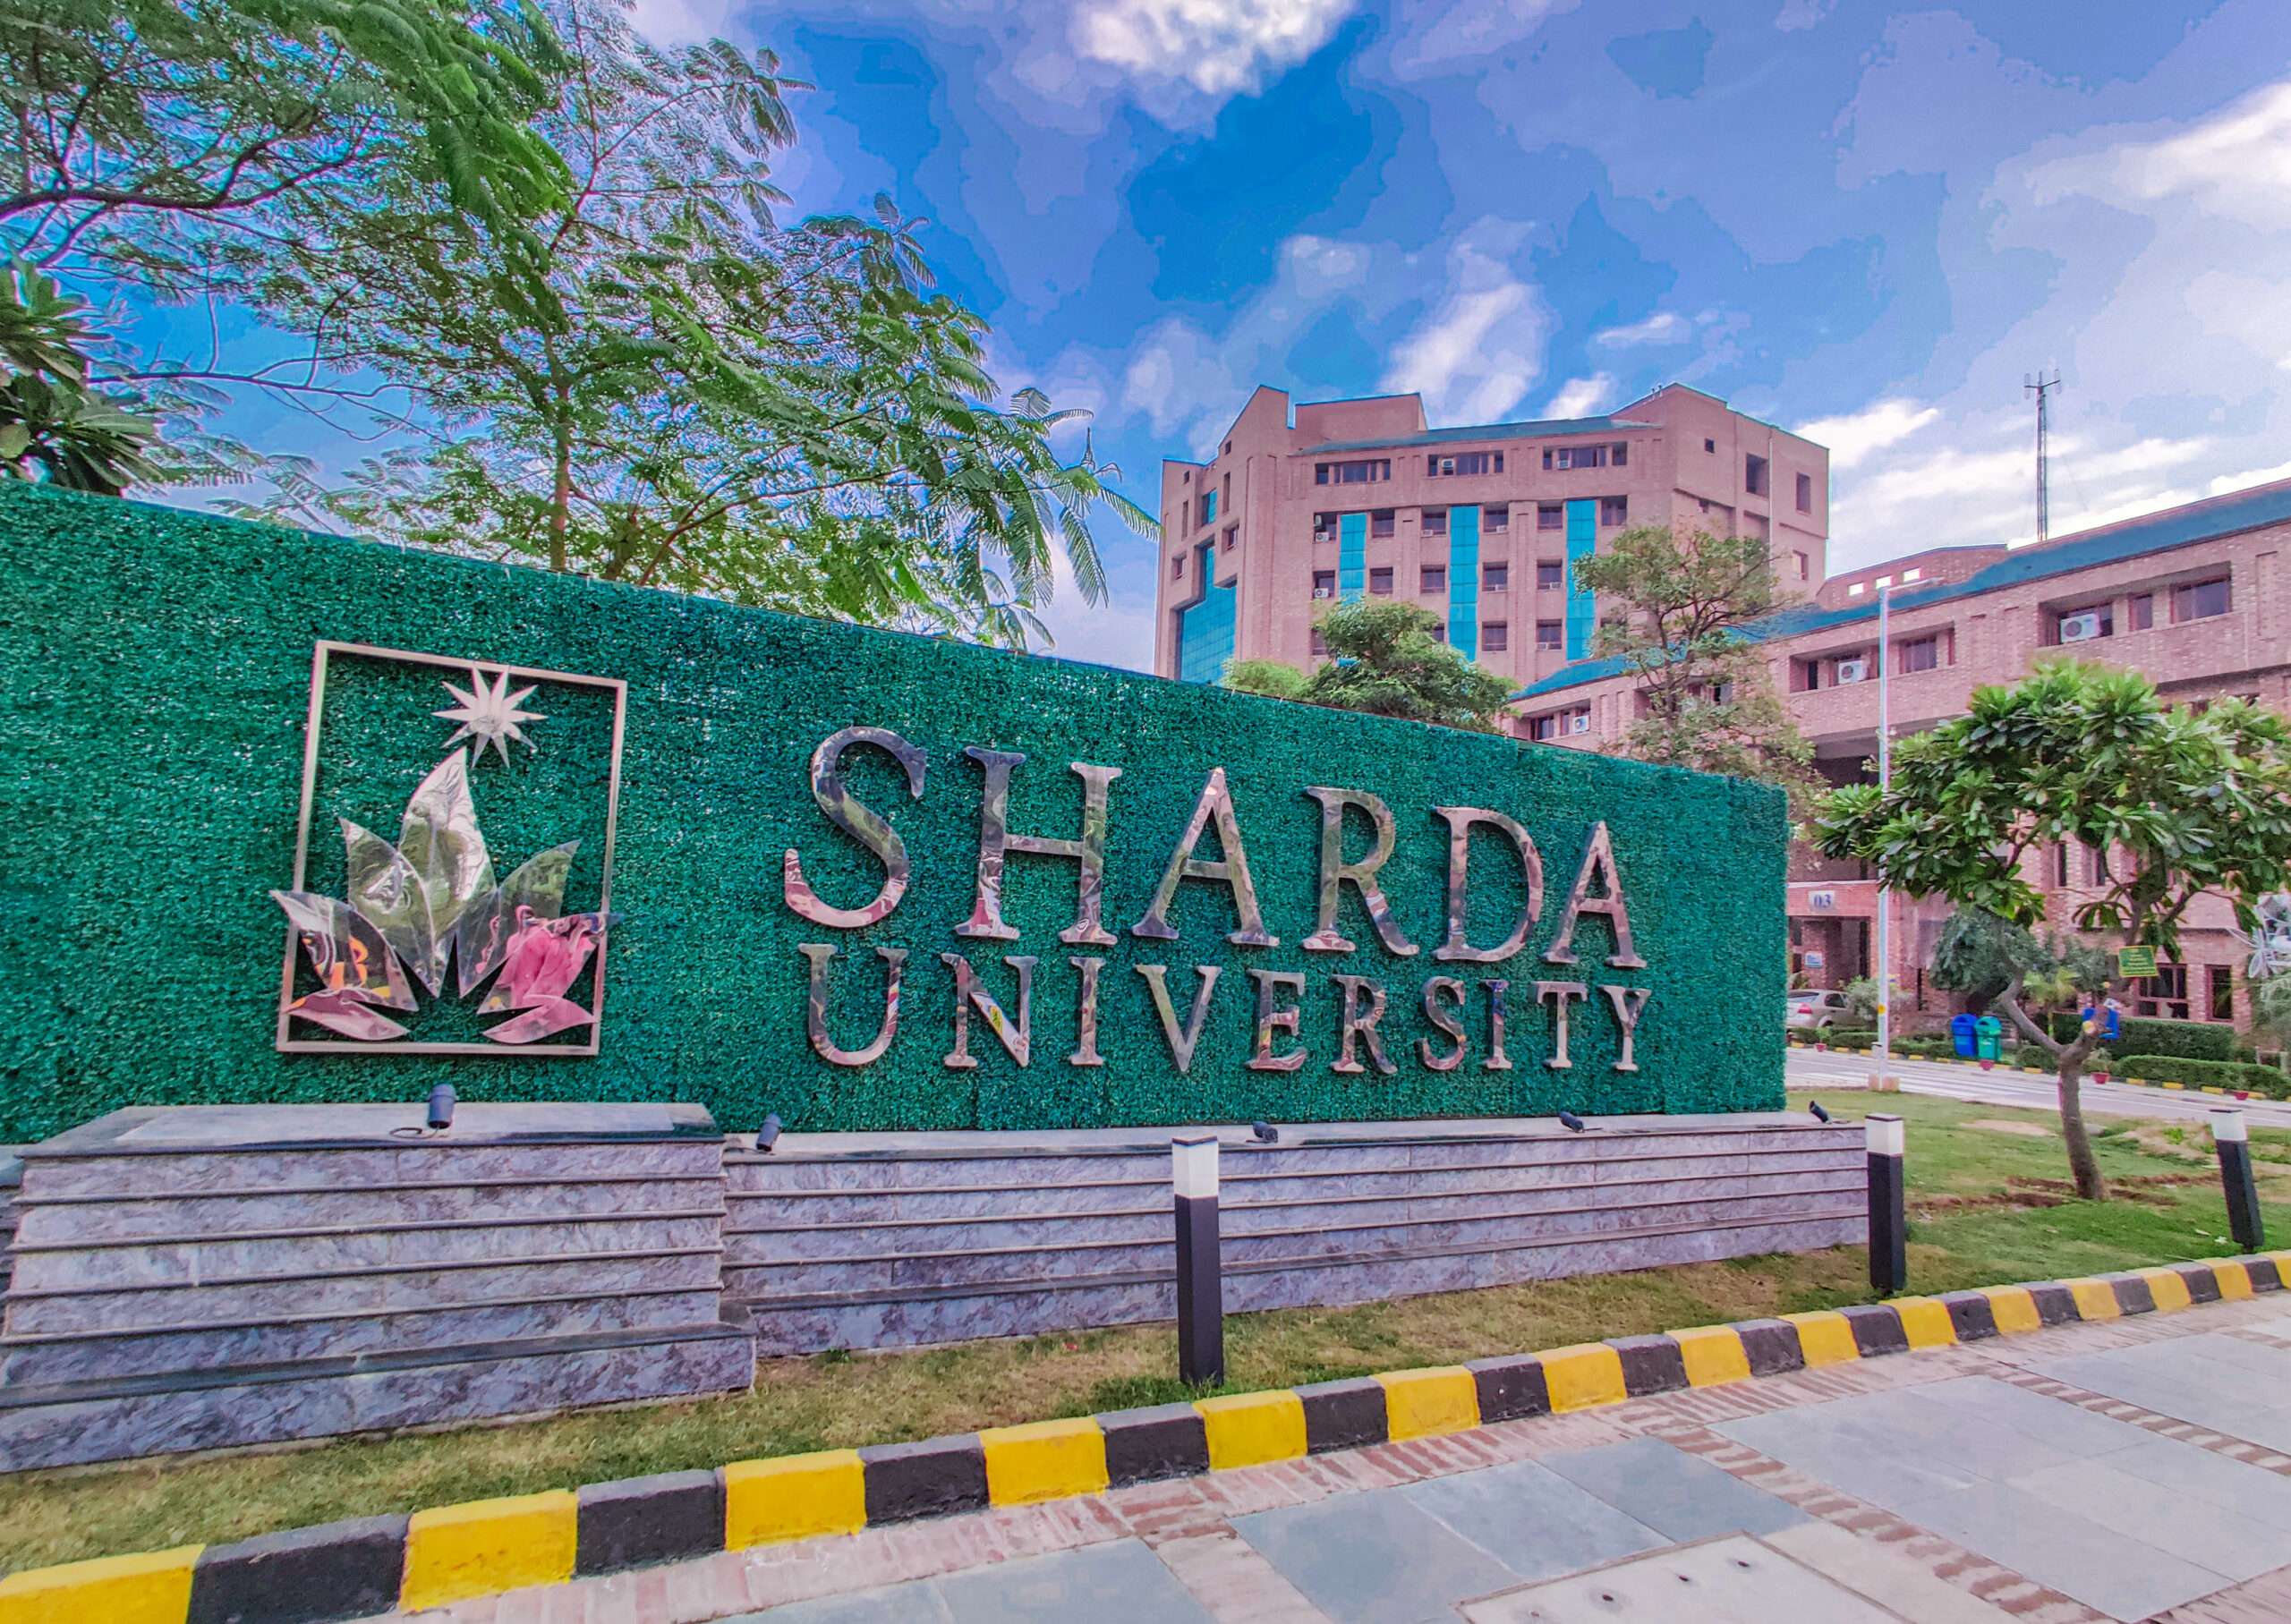 File:Sharda University.jpg - Wikipedia